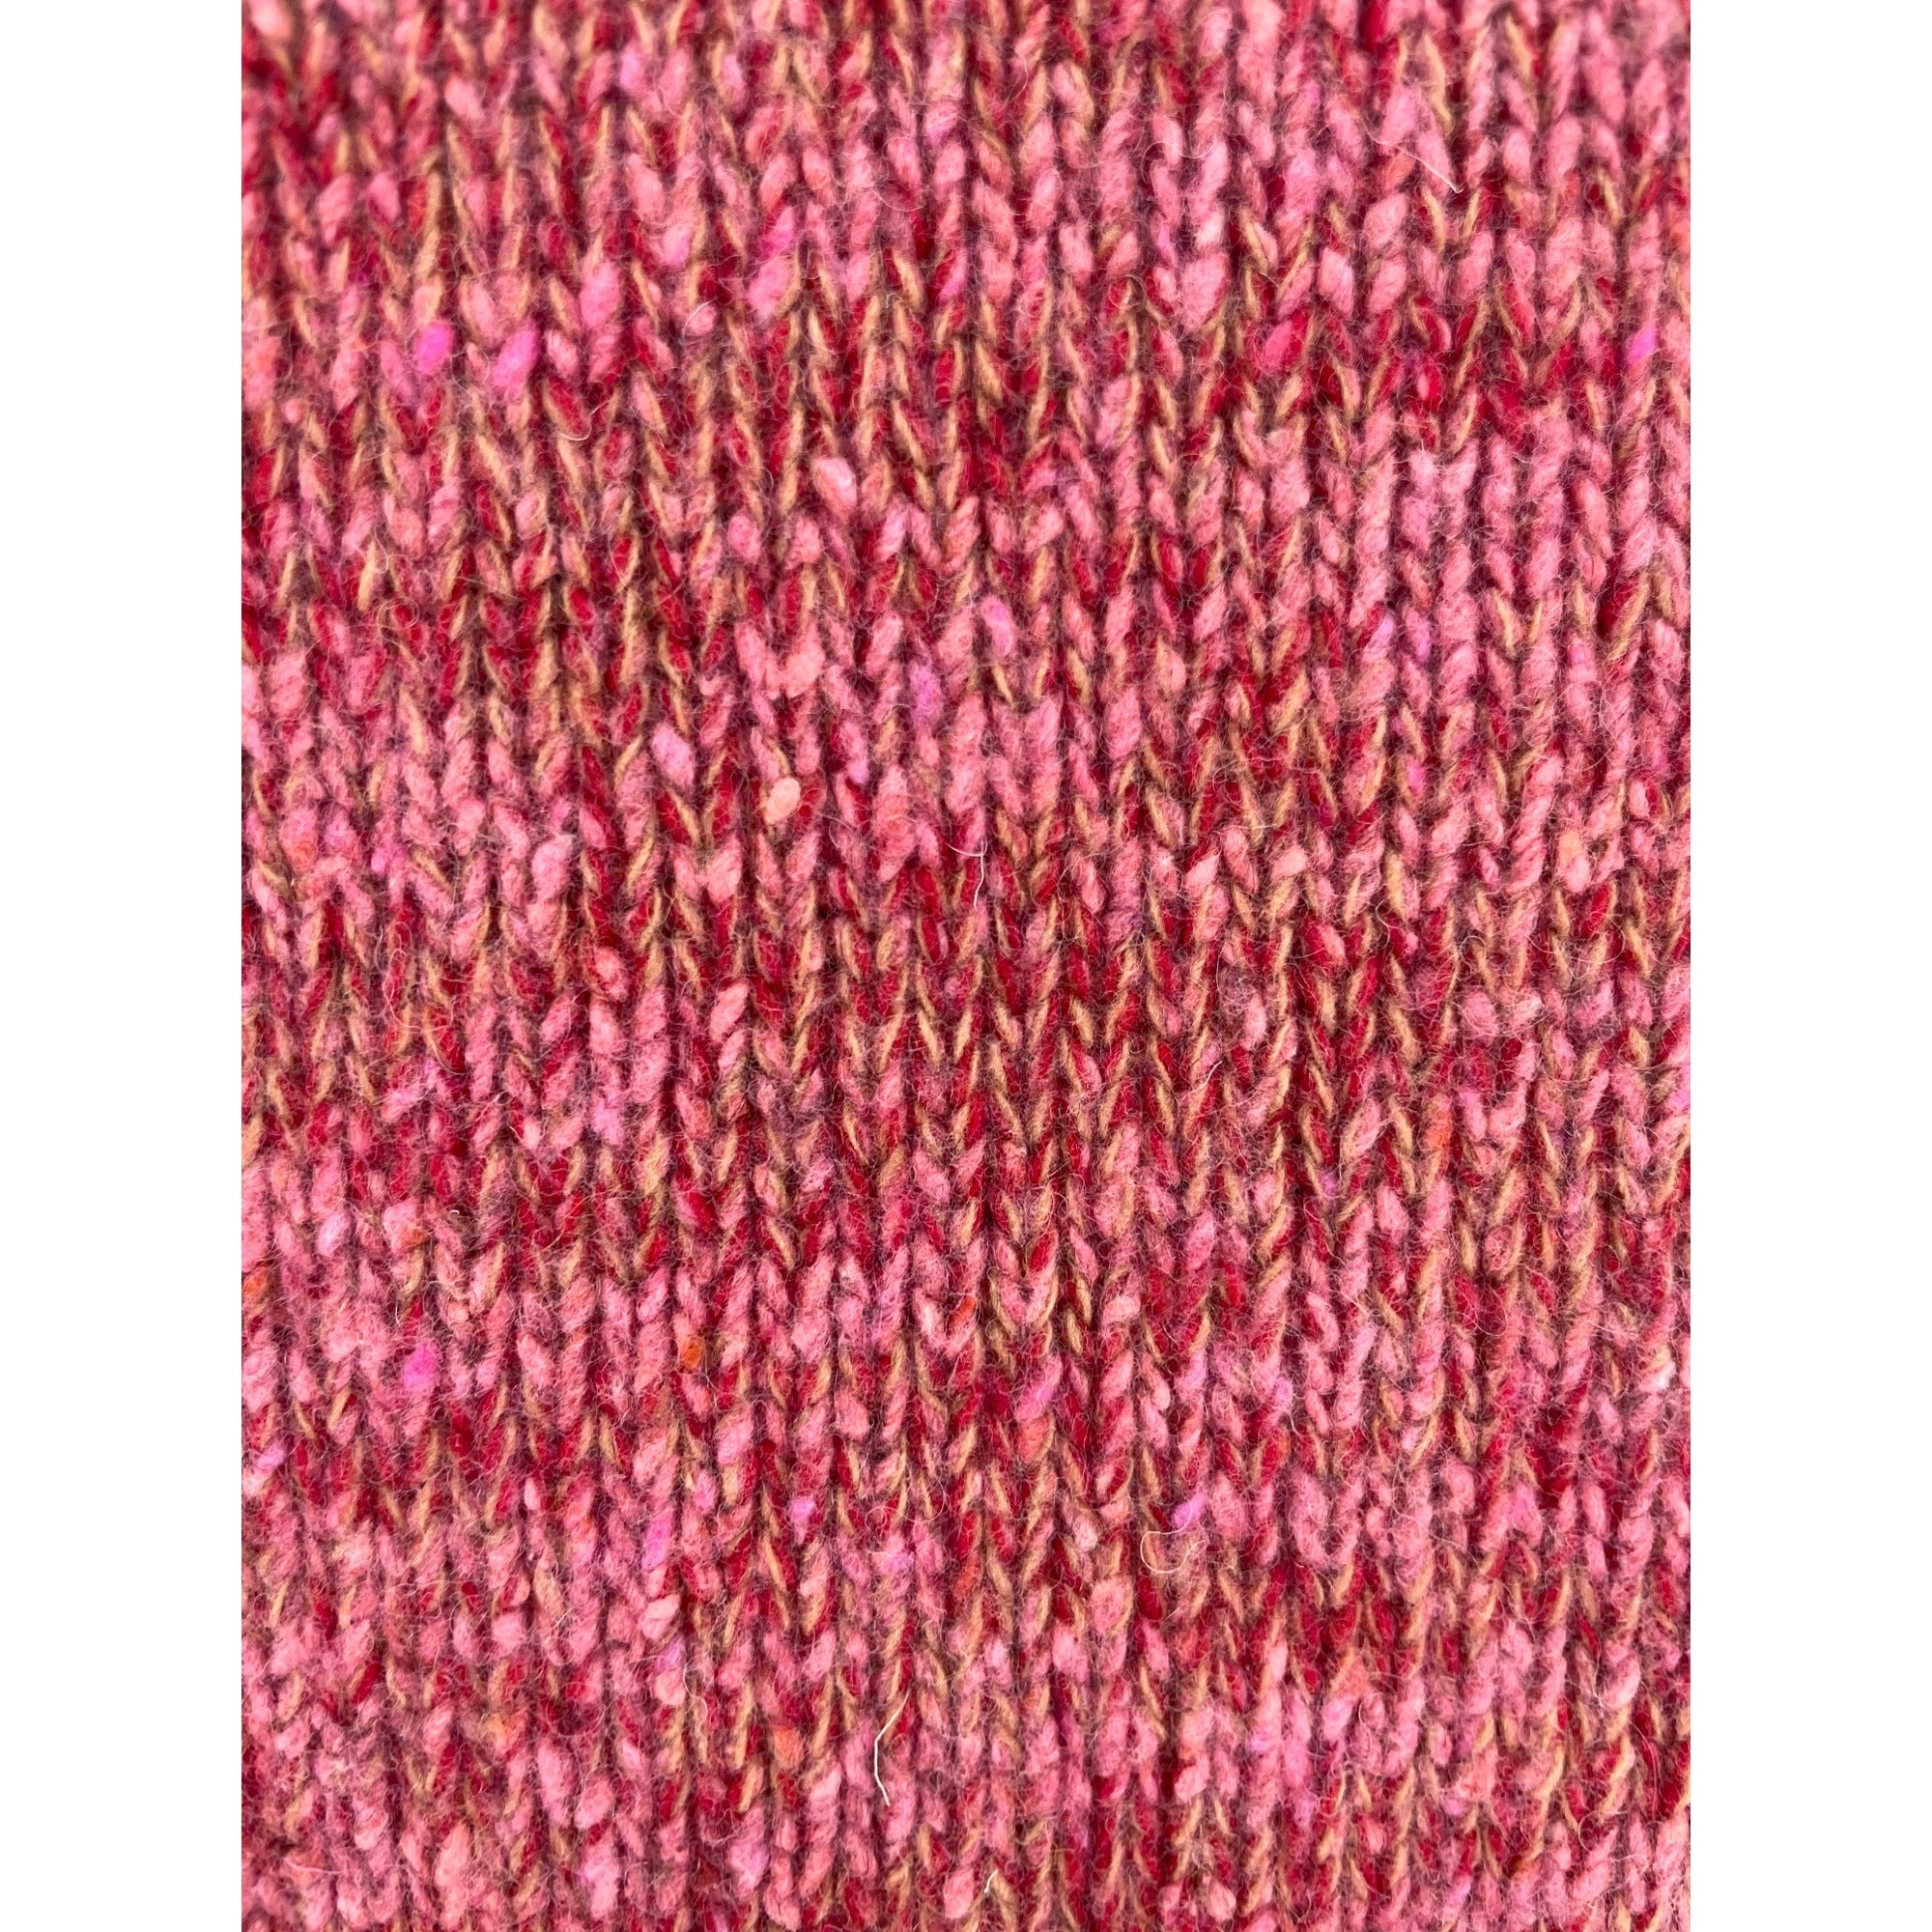 Ann Taylor Women's Size Large Mauve Pink Knit Wool Blend Sweater